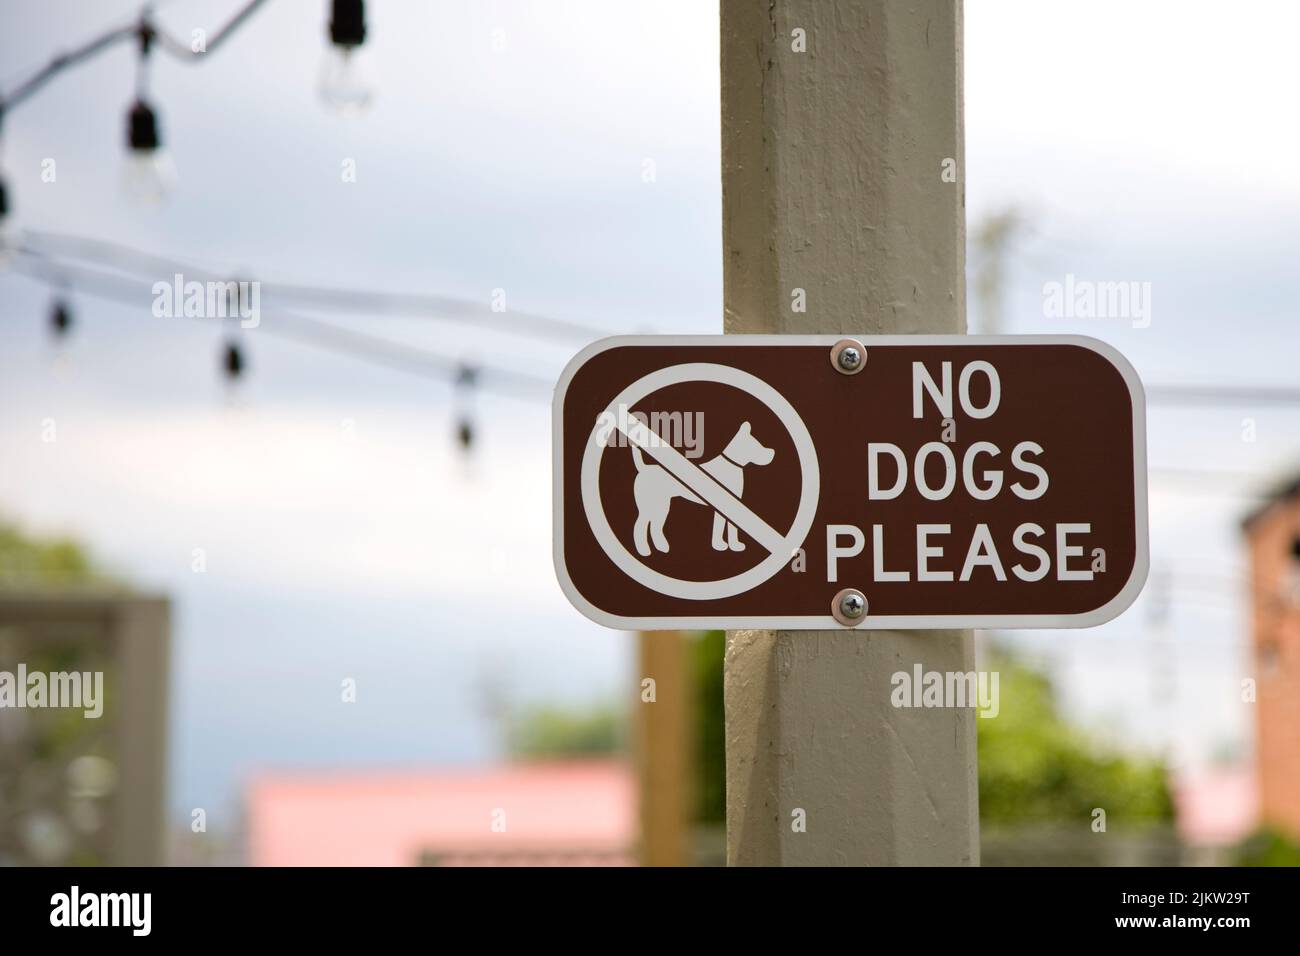 No dog sign at the beach. Stock Photo